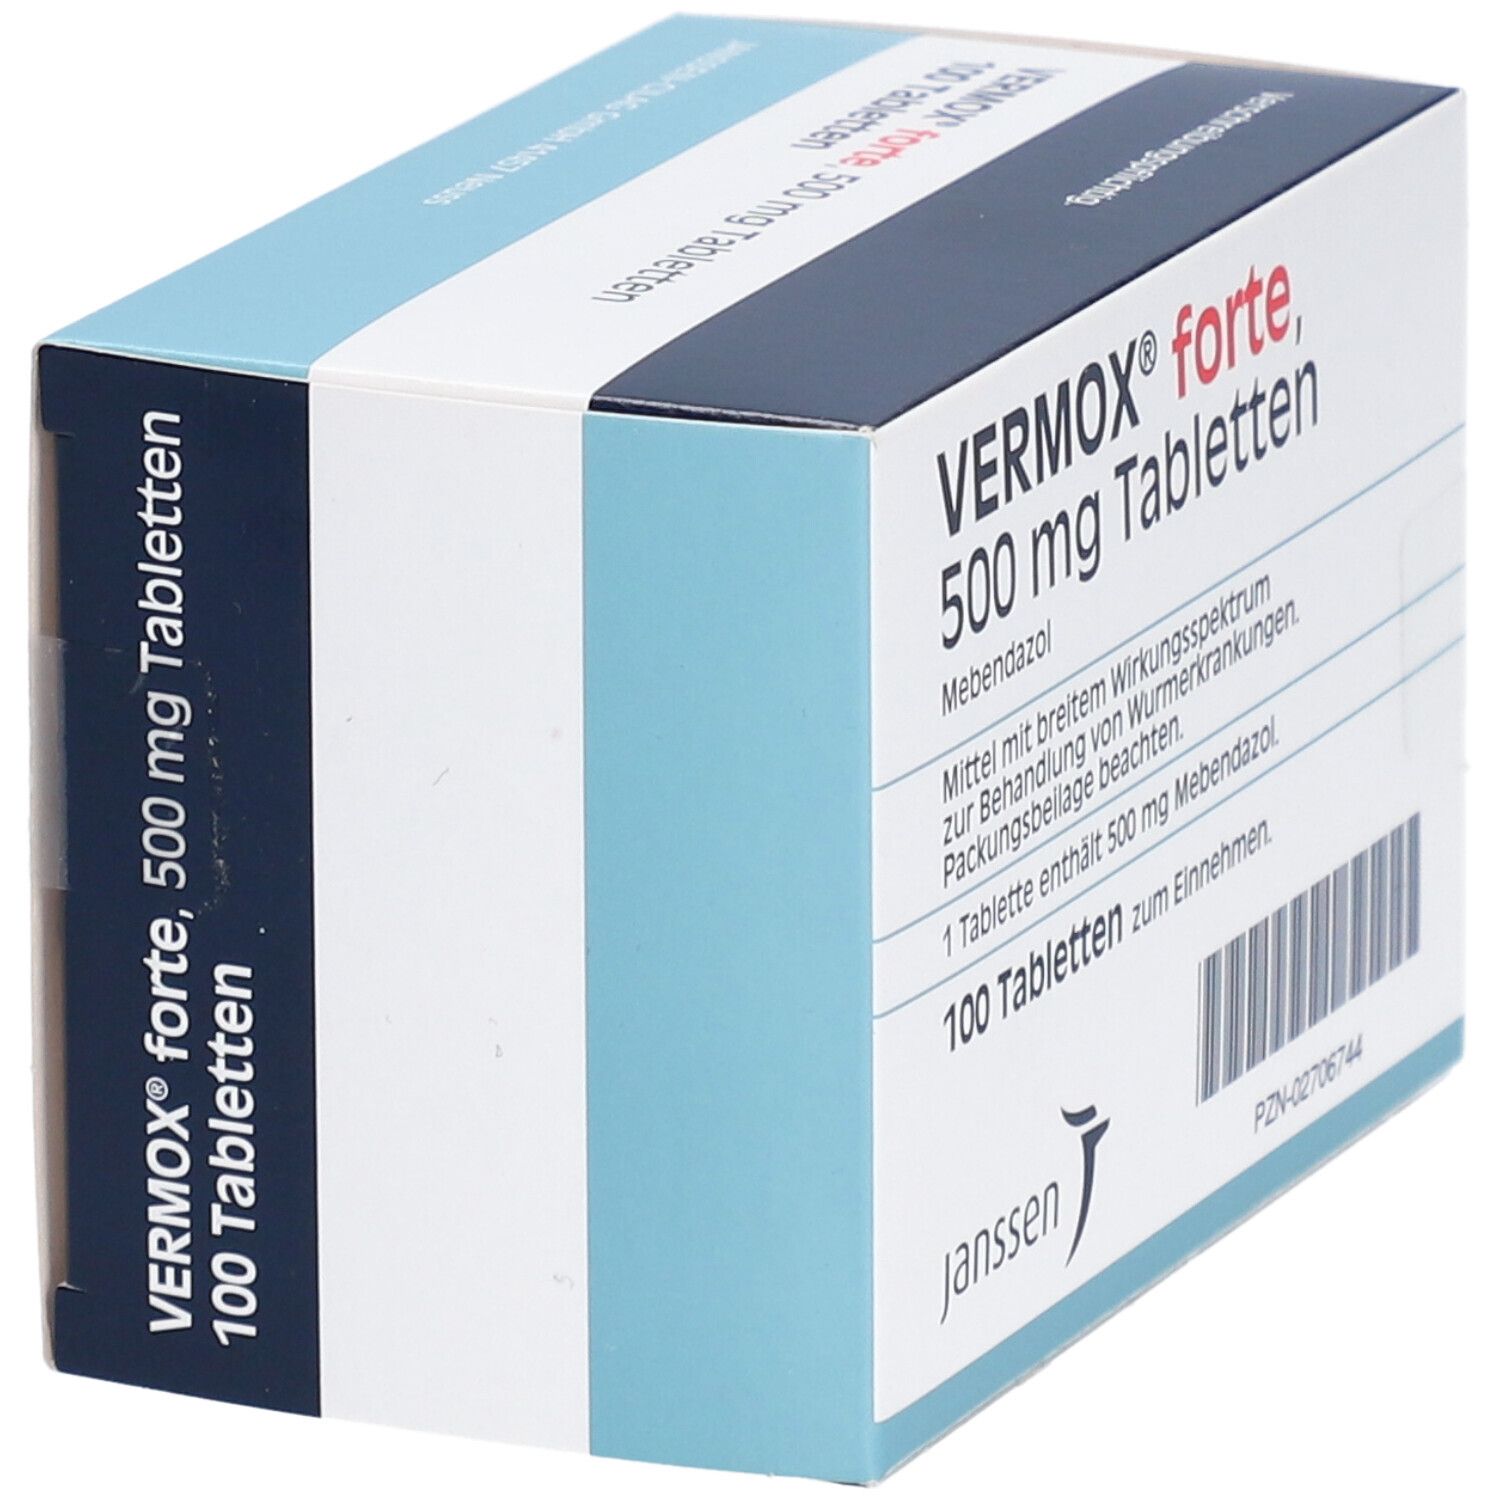 VERMOX® forte 500 mg